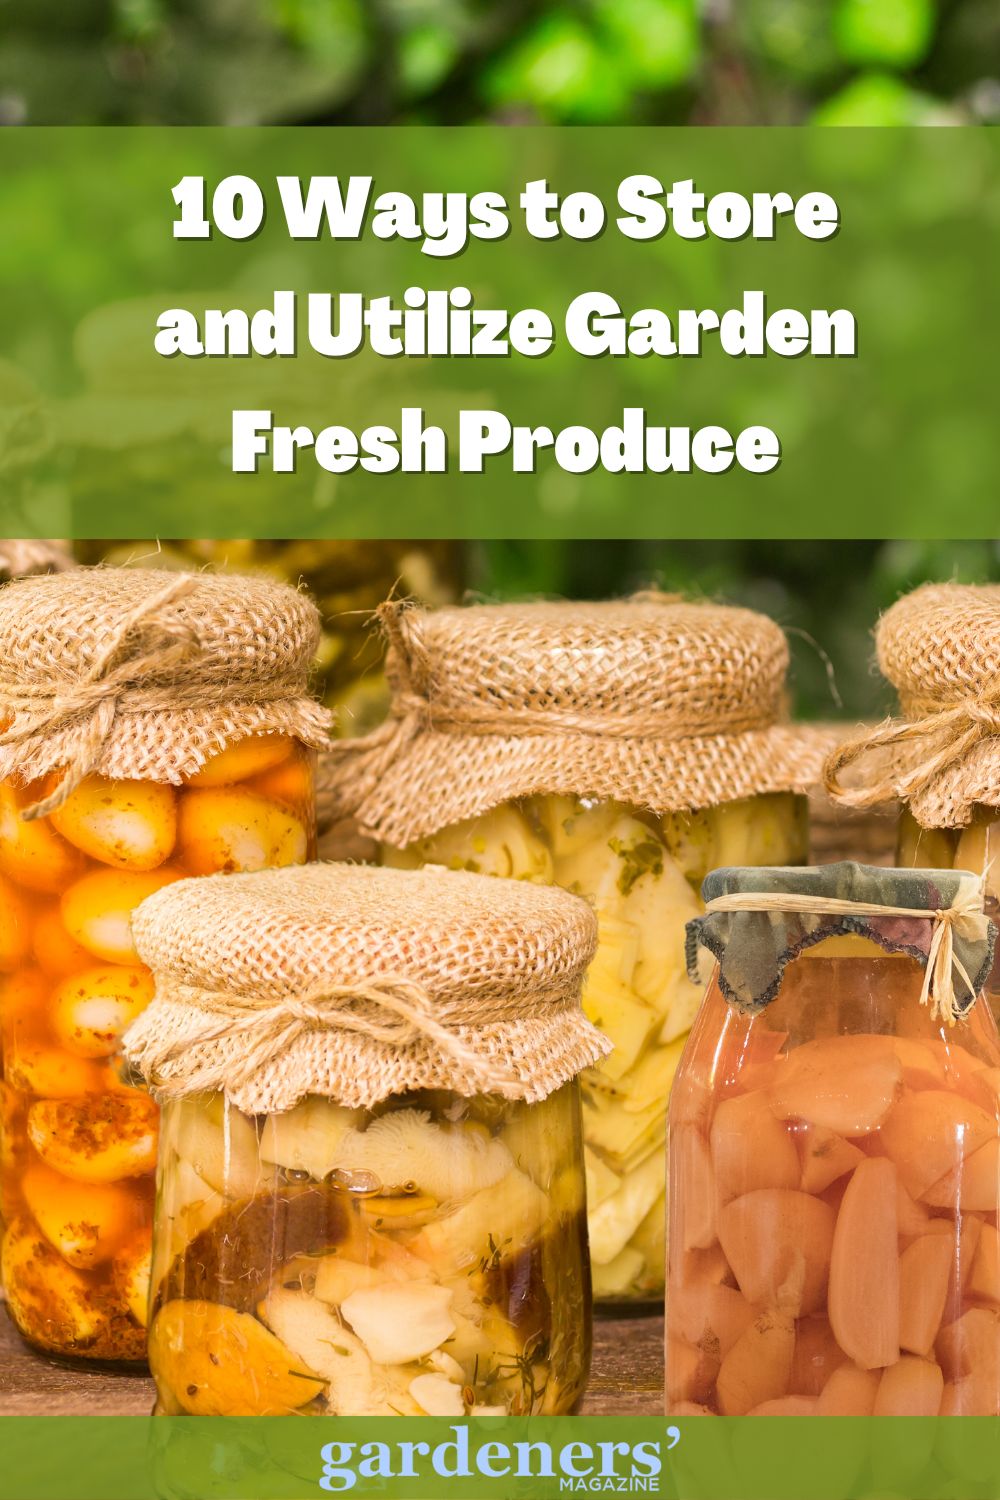 Garden fresh produce in canned bottles